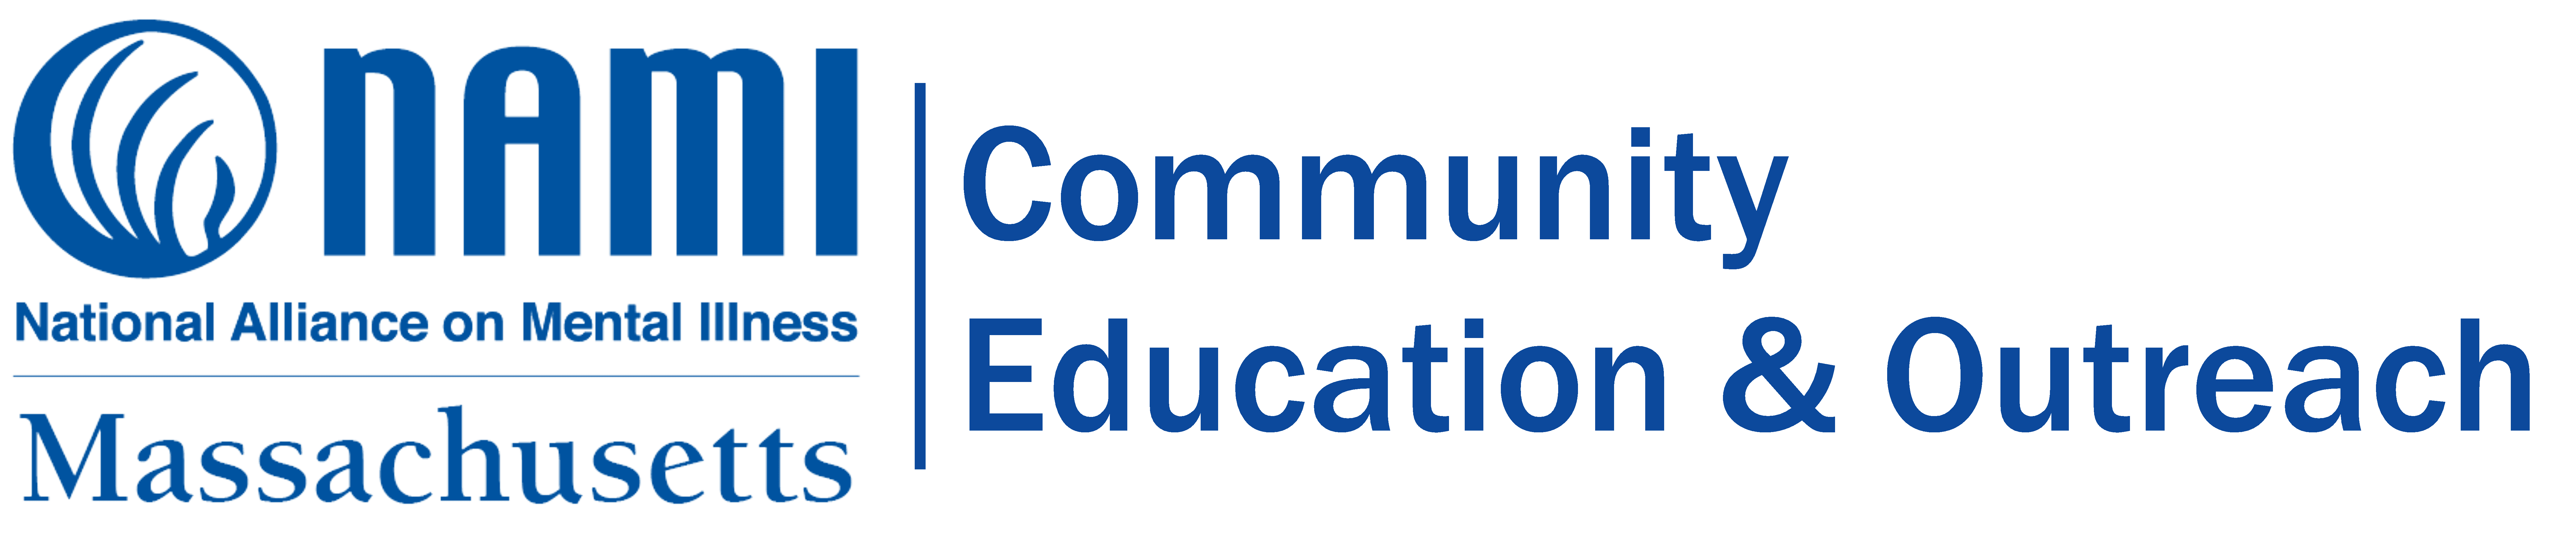 NMAI Mass Community Education & Outreach logo